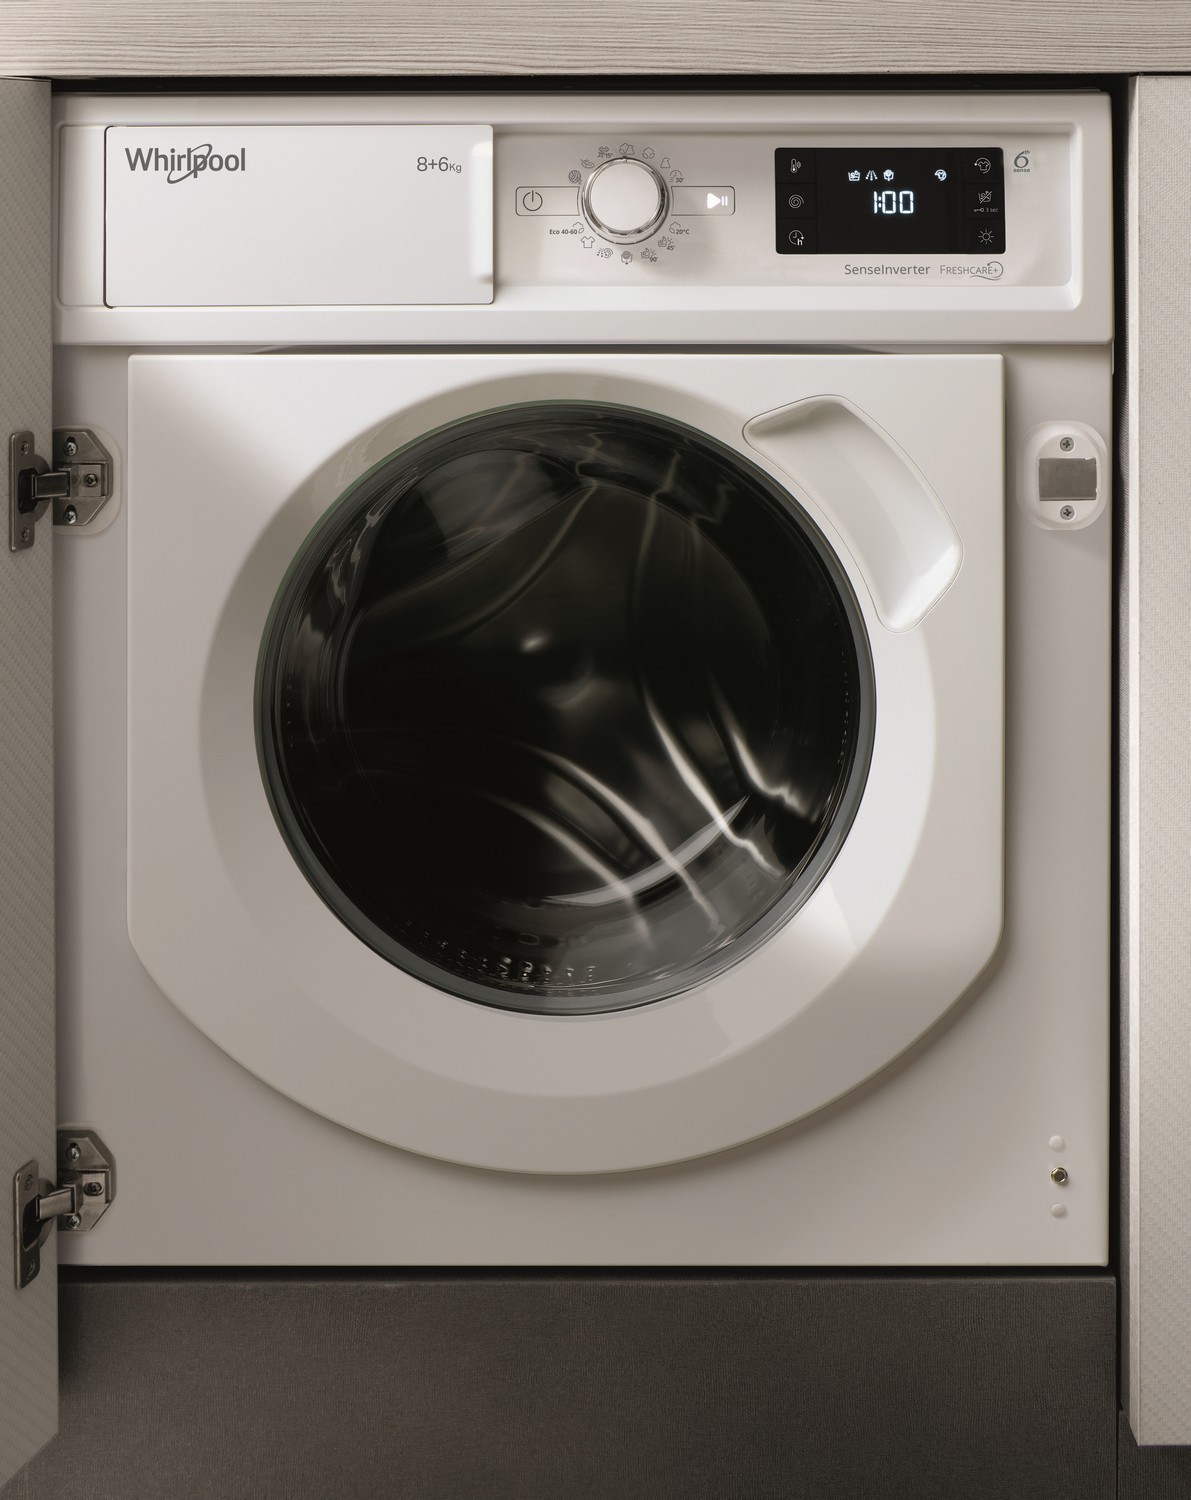 Whirlpool Bi Wdwg 861484 eu lavadora secadora integrable clase 8+6 kg 1400 rpm lavasecadora 86kg whirpool 8 6 7 68 1.400